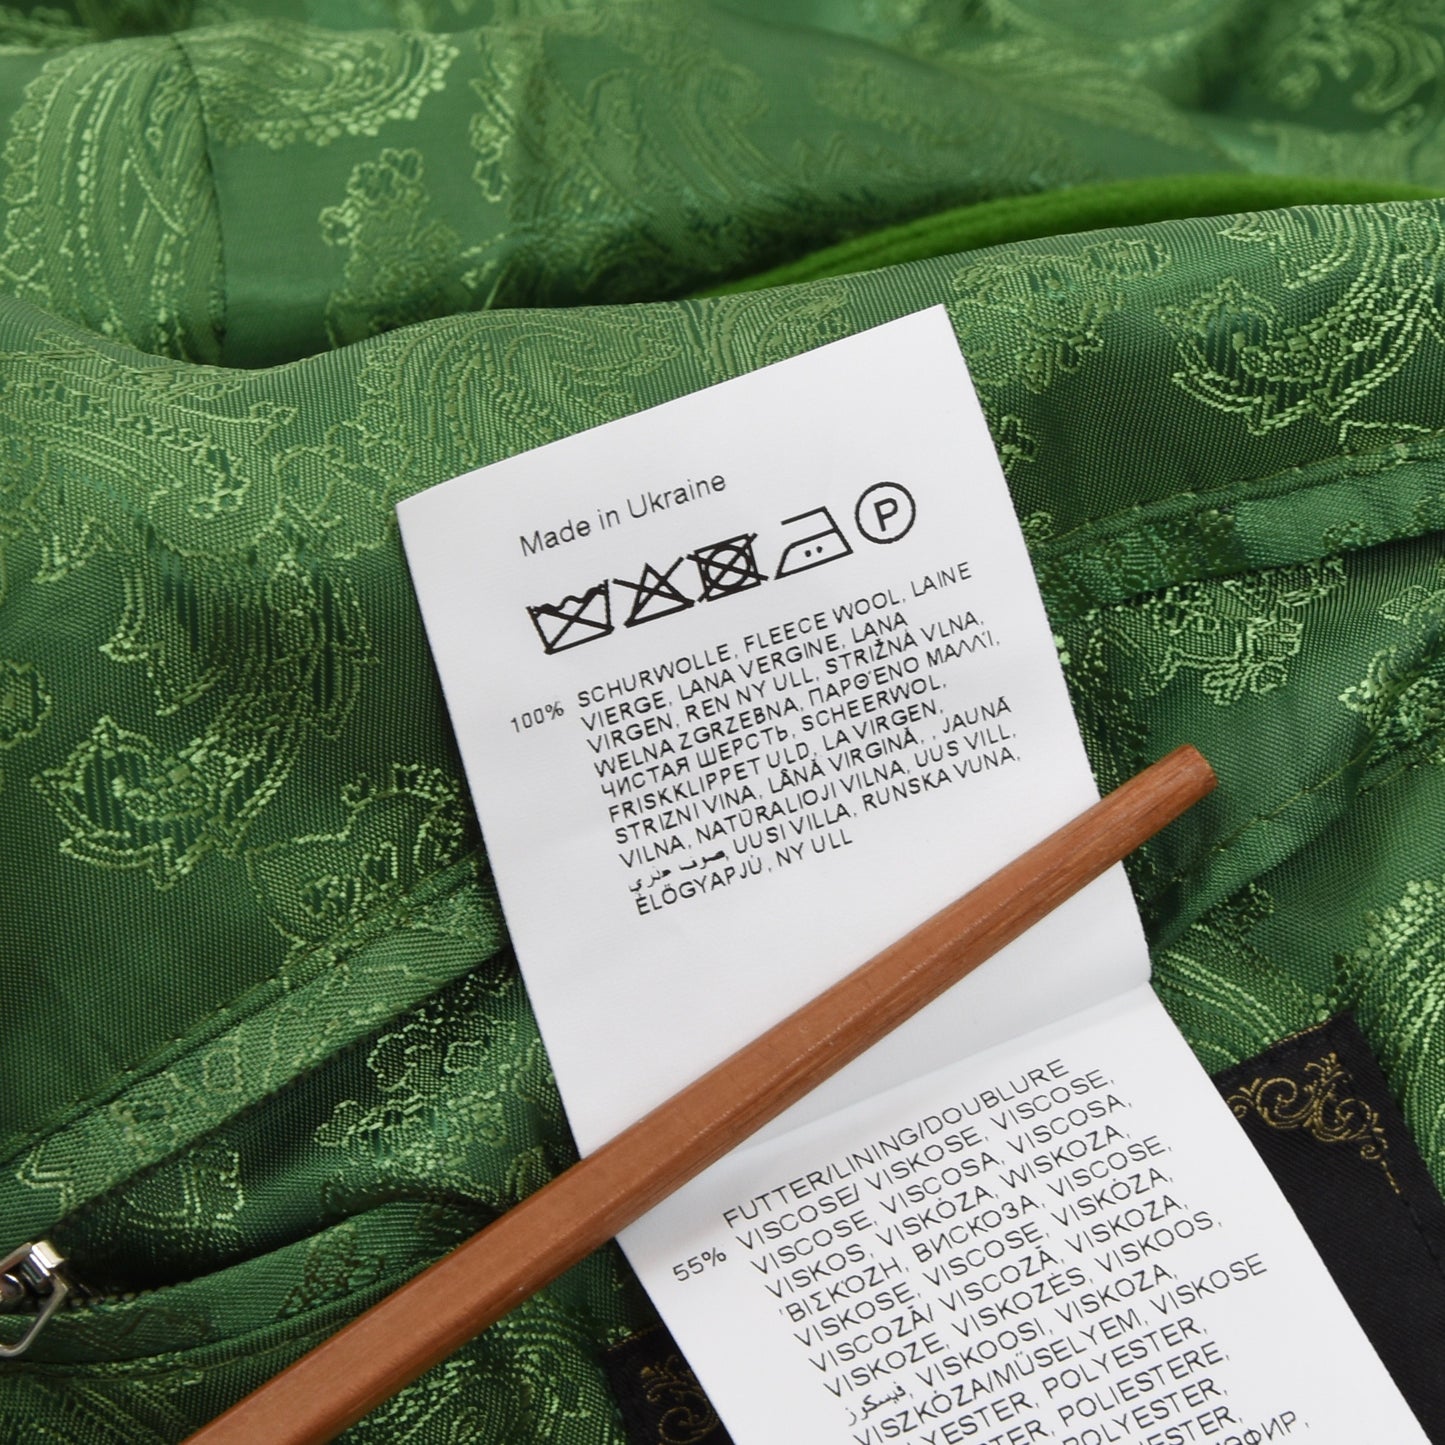 Alpina Wool Trachtenweste Size 60 - Moss Green